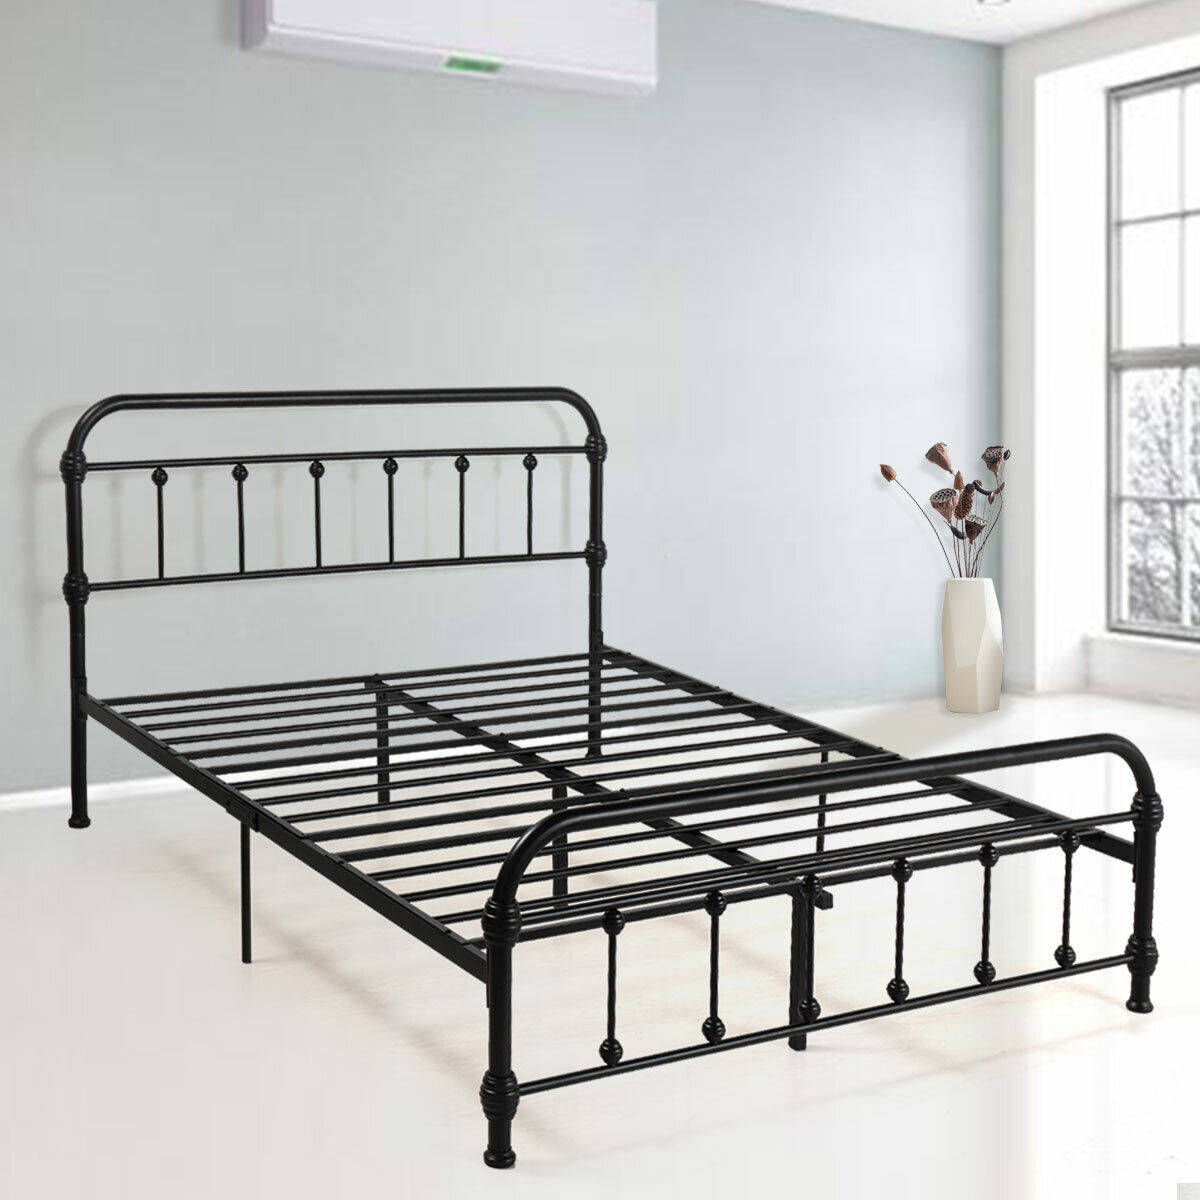 Metal Platform Bed Frame Steel Slat, Queen Size Heavy Duty Metal Platform Bed Frame